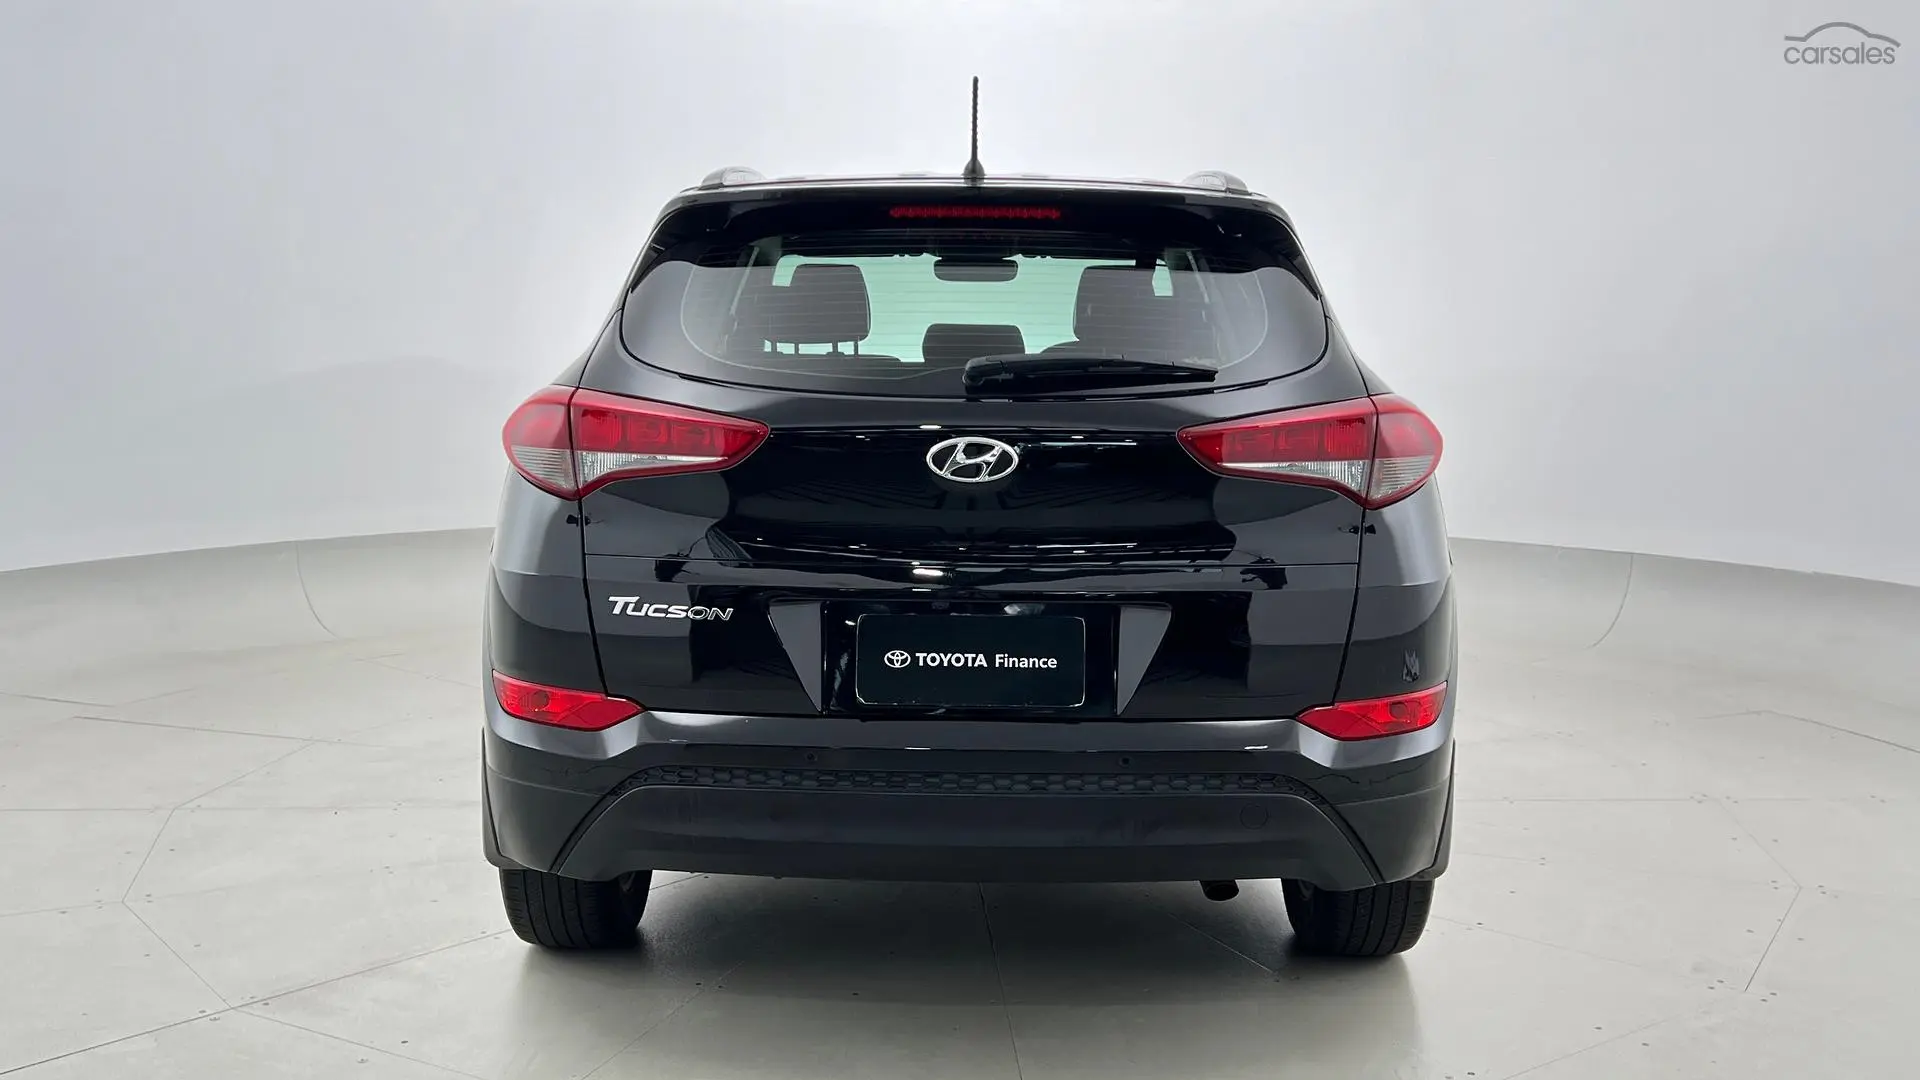 2017 Hyundai Tucson Image 6